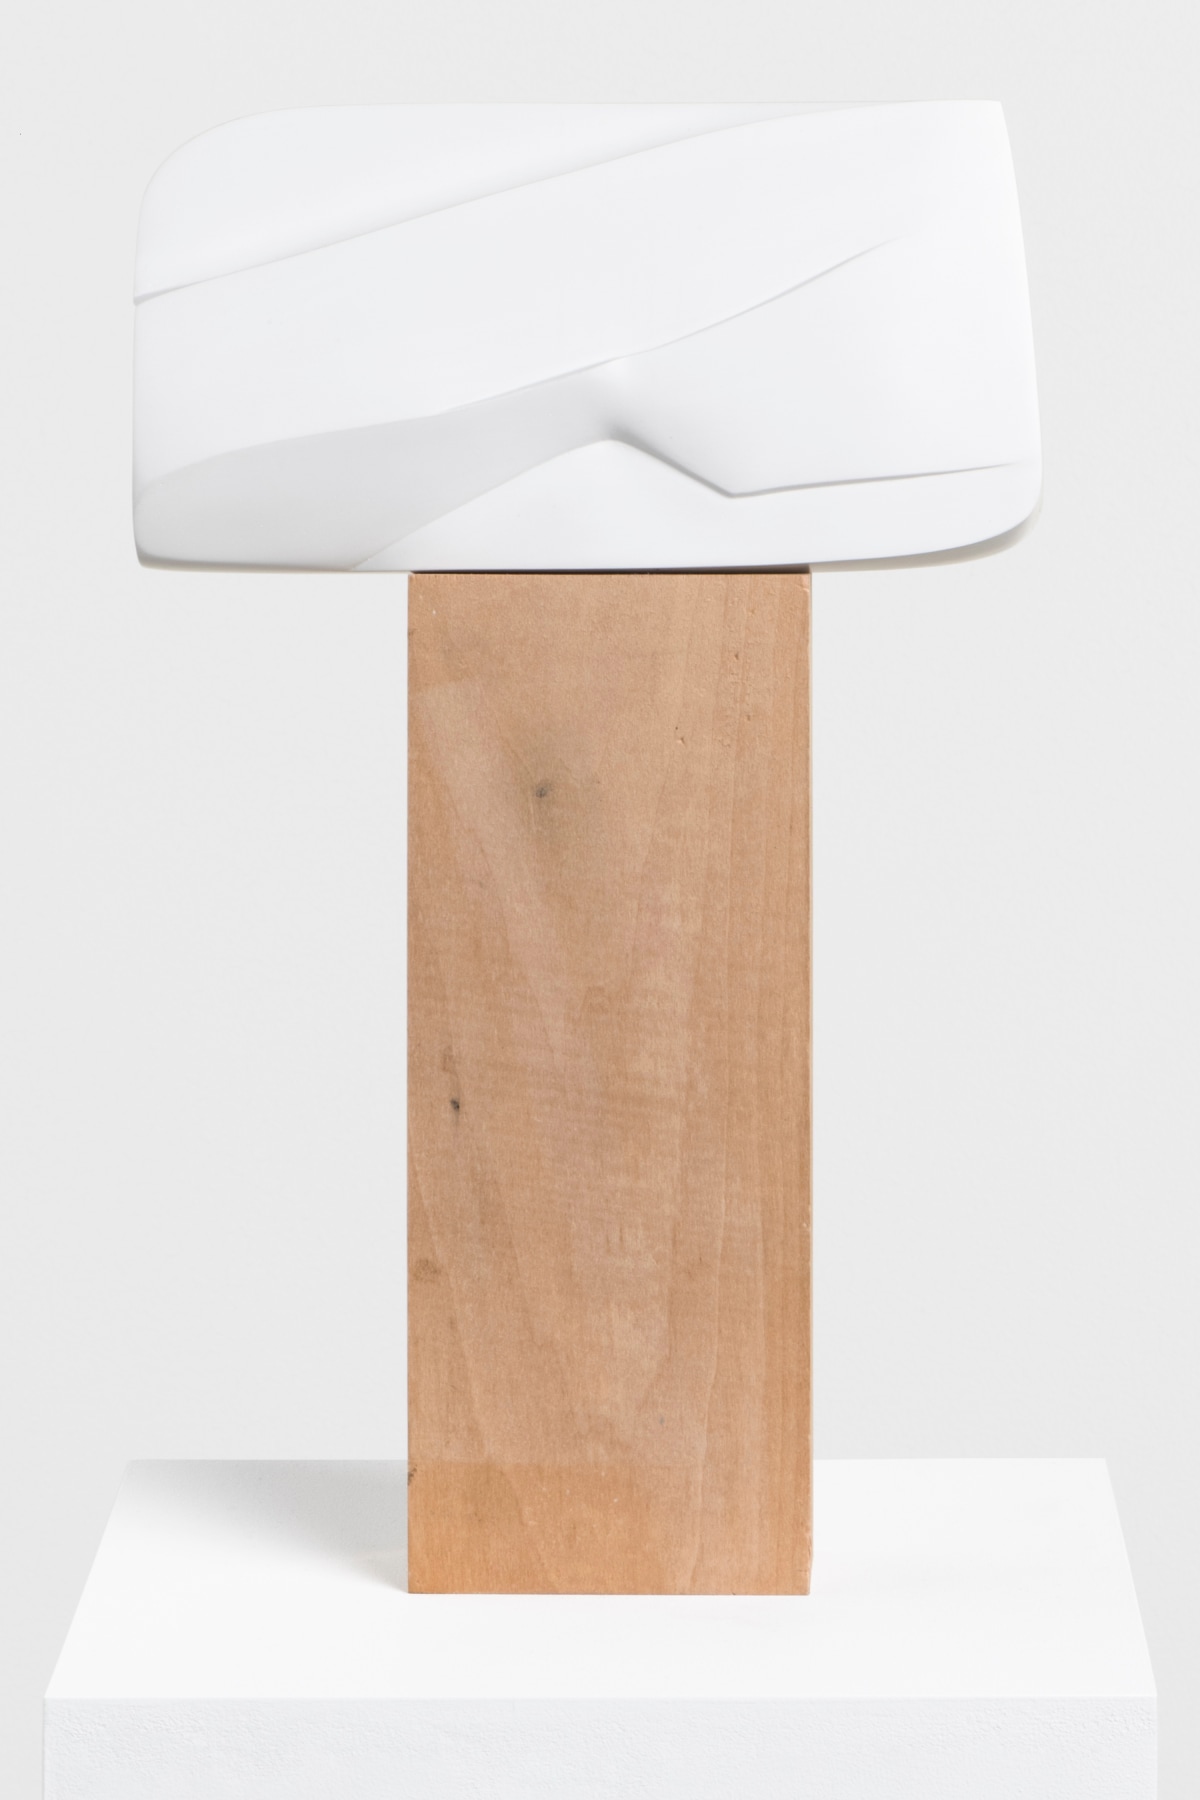 wooden, rectangular block balancing a white cube